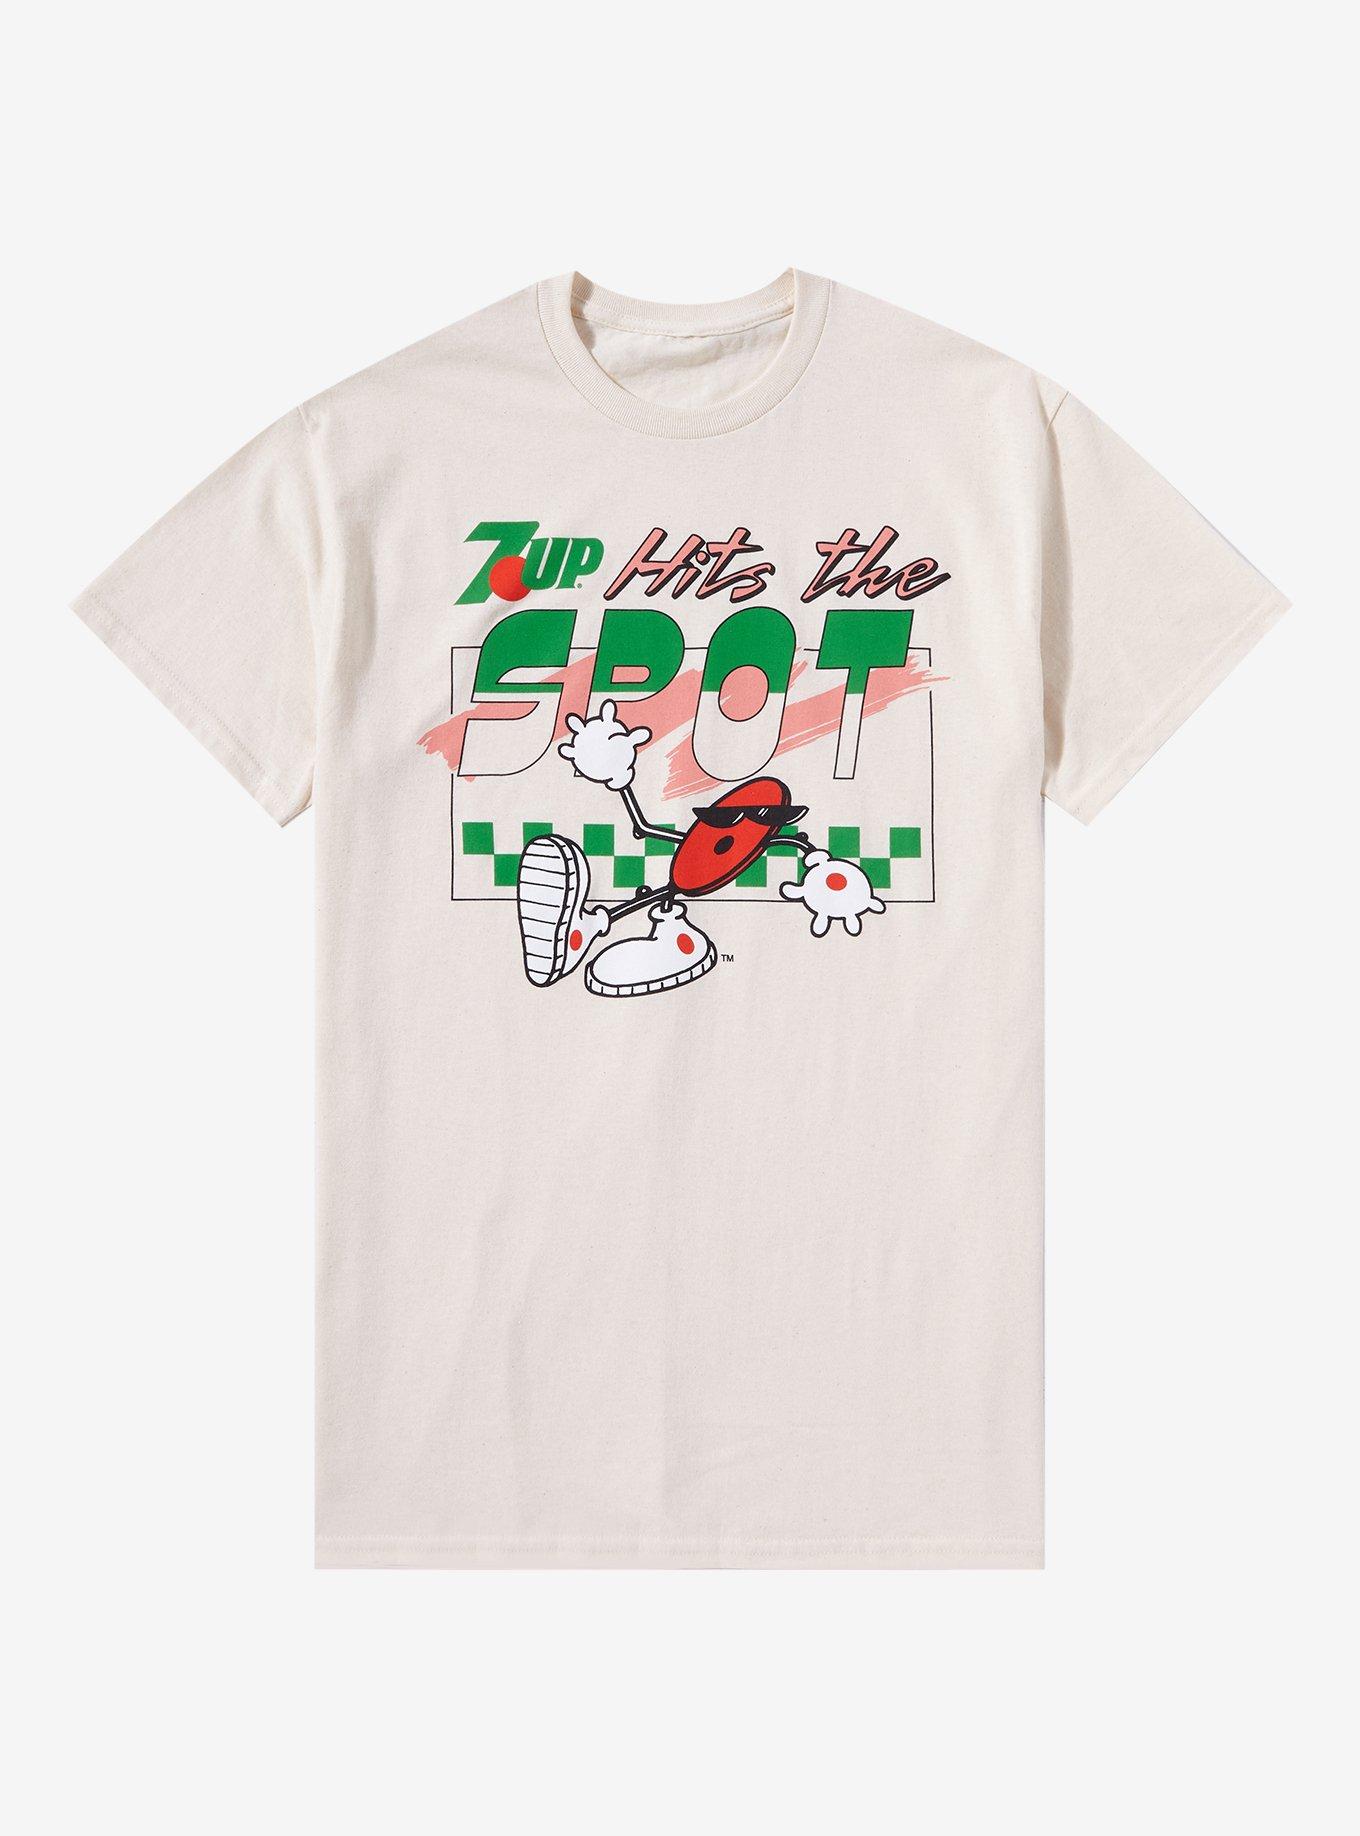 7Up Hits The Spot T-Shirt